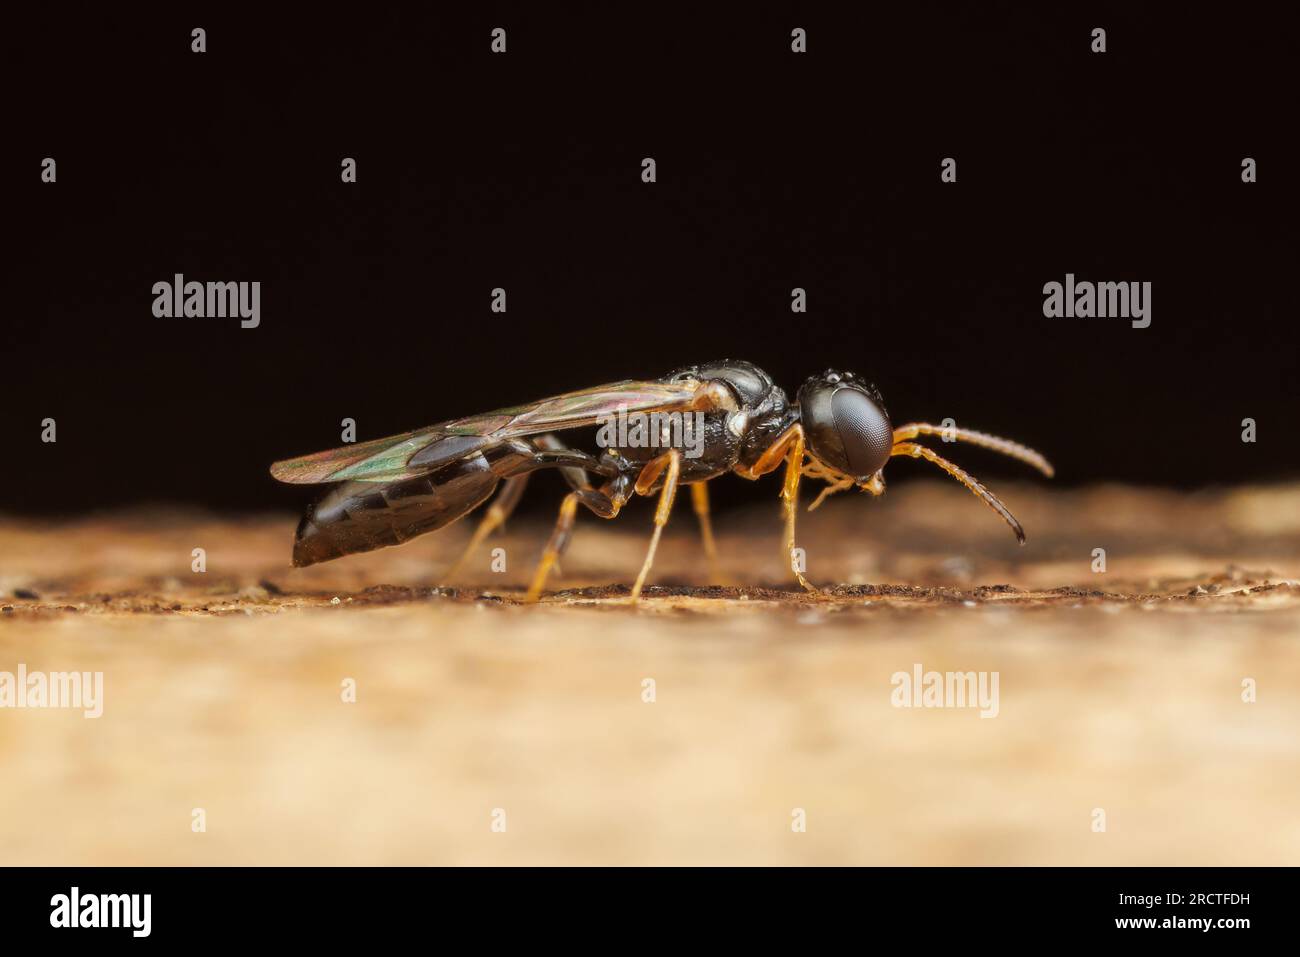 Square-headed Wasp (Stigmus sp.) Stock Photo